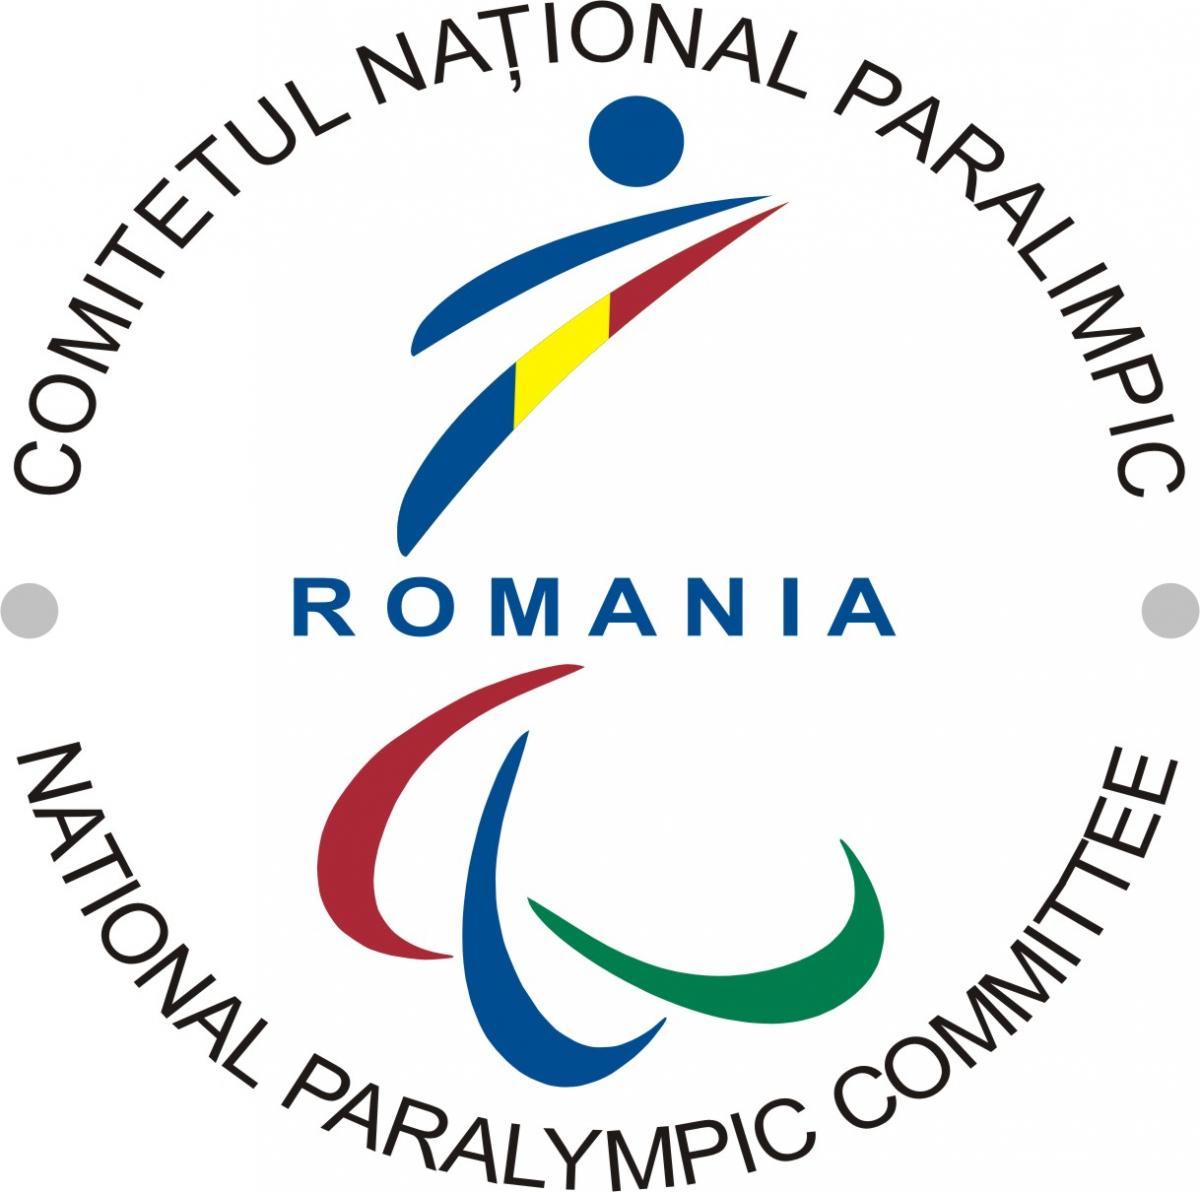 NPC Romania logo.